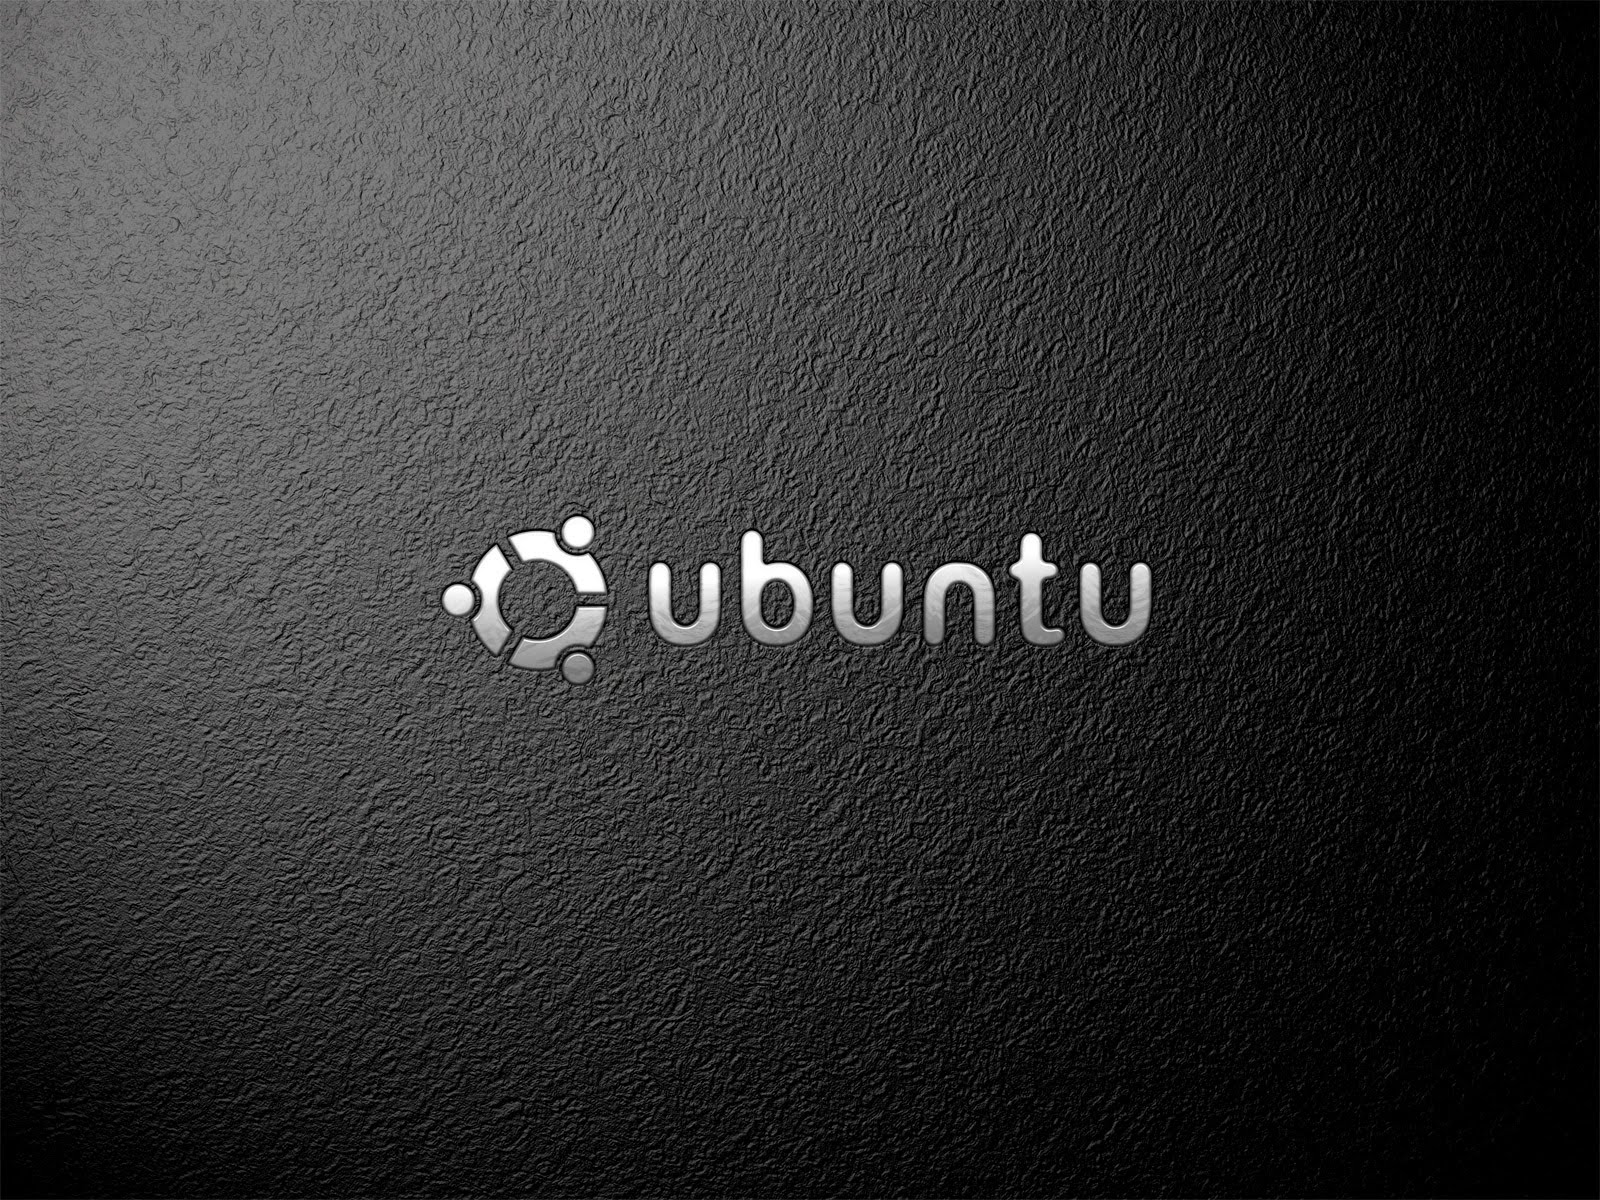 https://blogger.googleusercontent.com/img/b/R29vZ2xl/AVvXsEjpHkyTUgUc7O04XYNL3rU6ZuJMIYoVyc28ZIDrHIc4ZCWeUutoT3oES8QiQU6PrGEXGxE4rNHj3ePCCo0TA3Ni8PdwvrfuFutOcJIwlWVd3zy8LZTBISJZ3LpKZQYxYc2kTBAyqe6GCB0/s1600/Ubuntu-black-slate-background.jpg